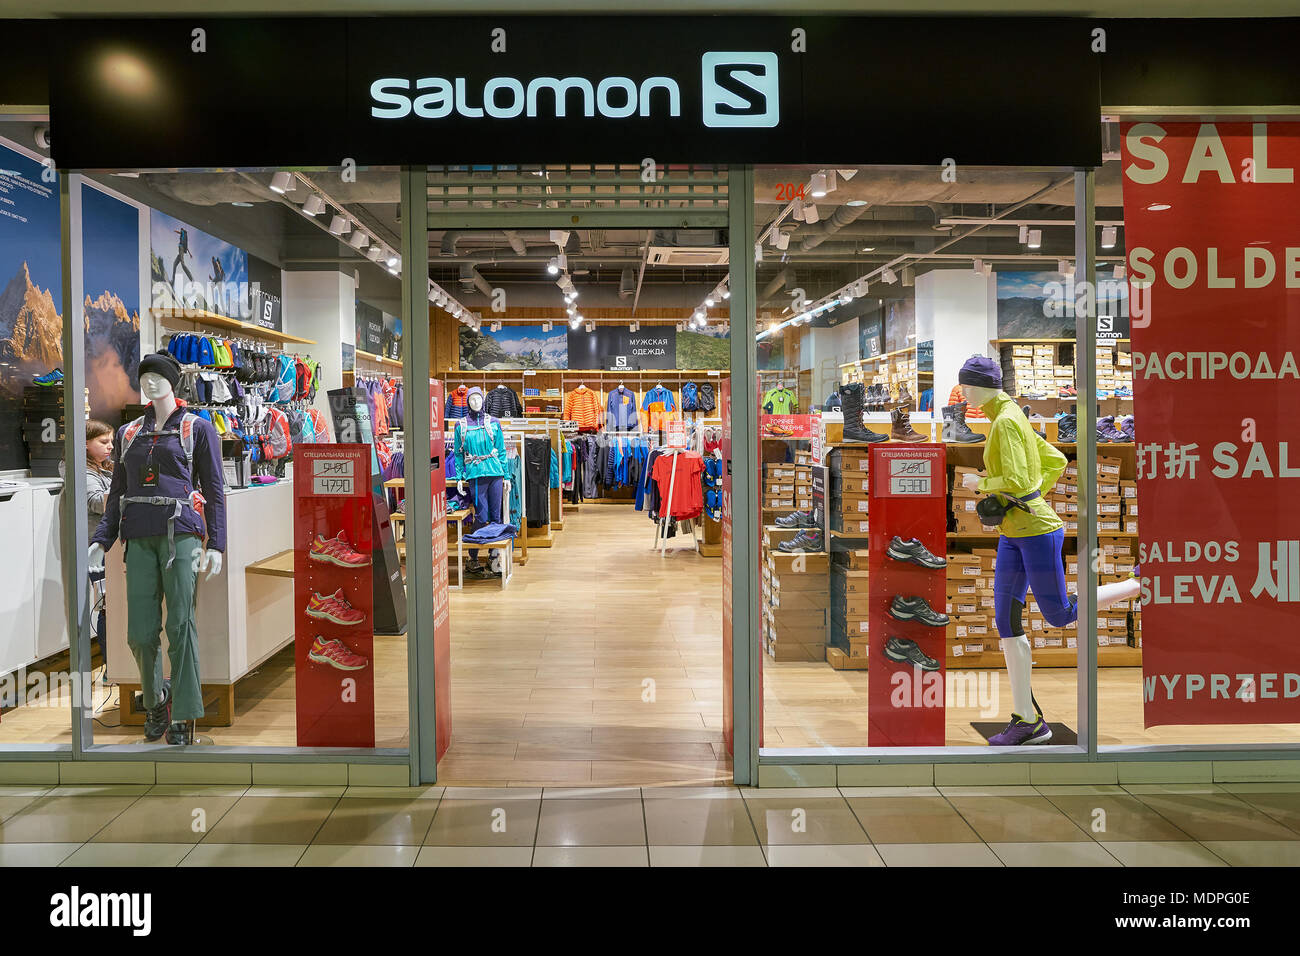 Store Salomon on Sale, 57% OFF | sportsregras.com